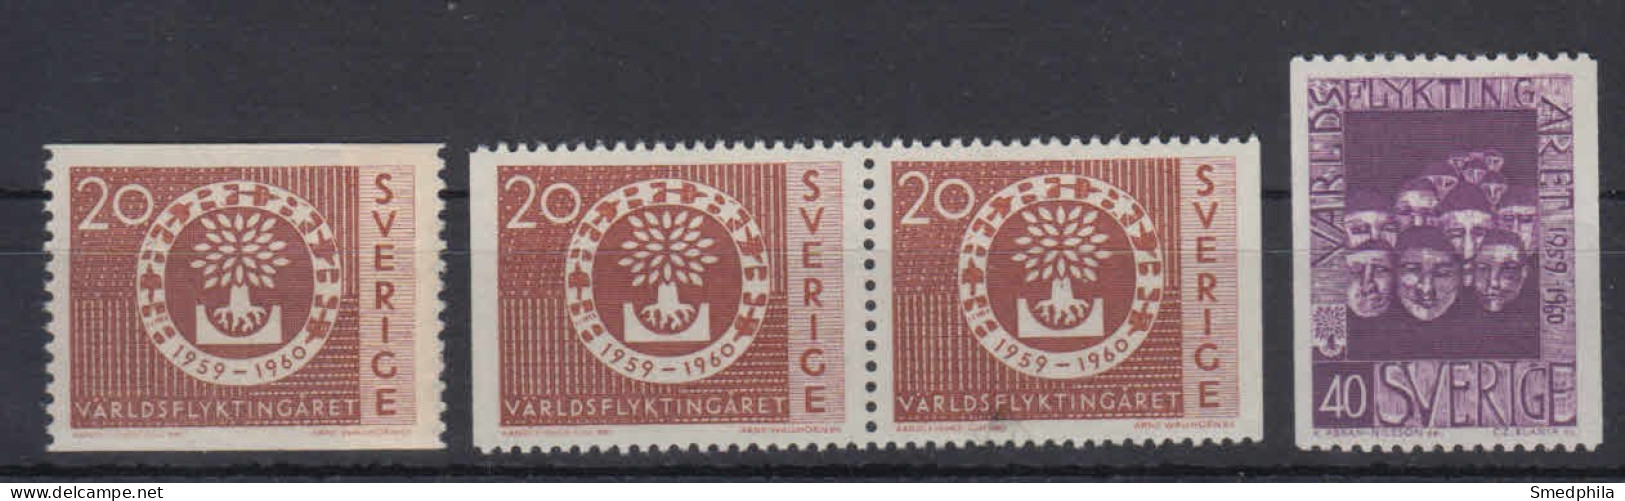 Sweden 1960 - Michel 457-458 MNH ** - Unused Stamps